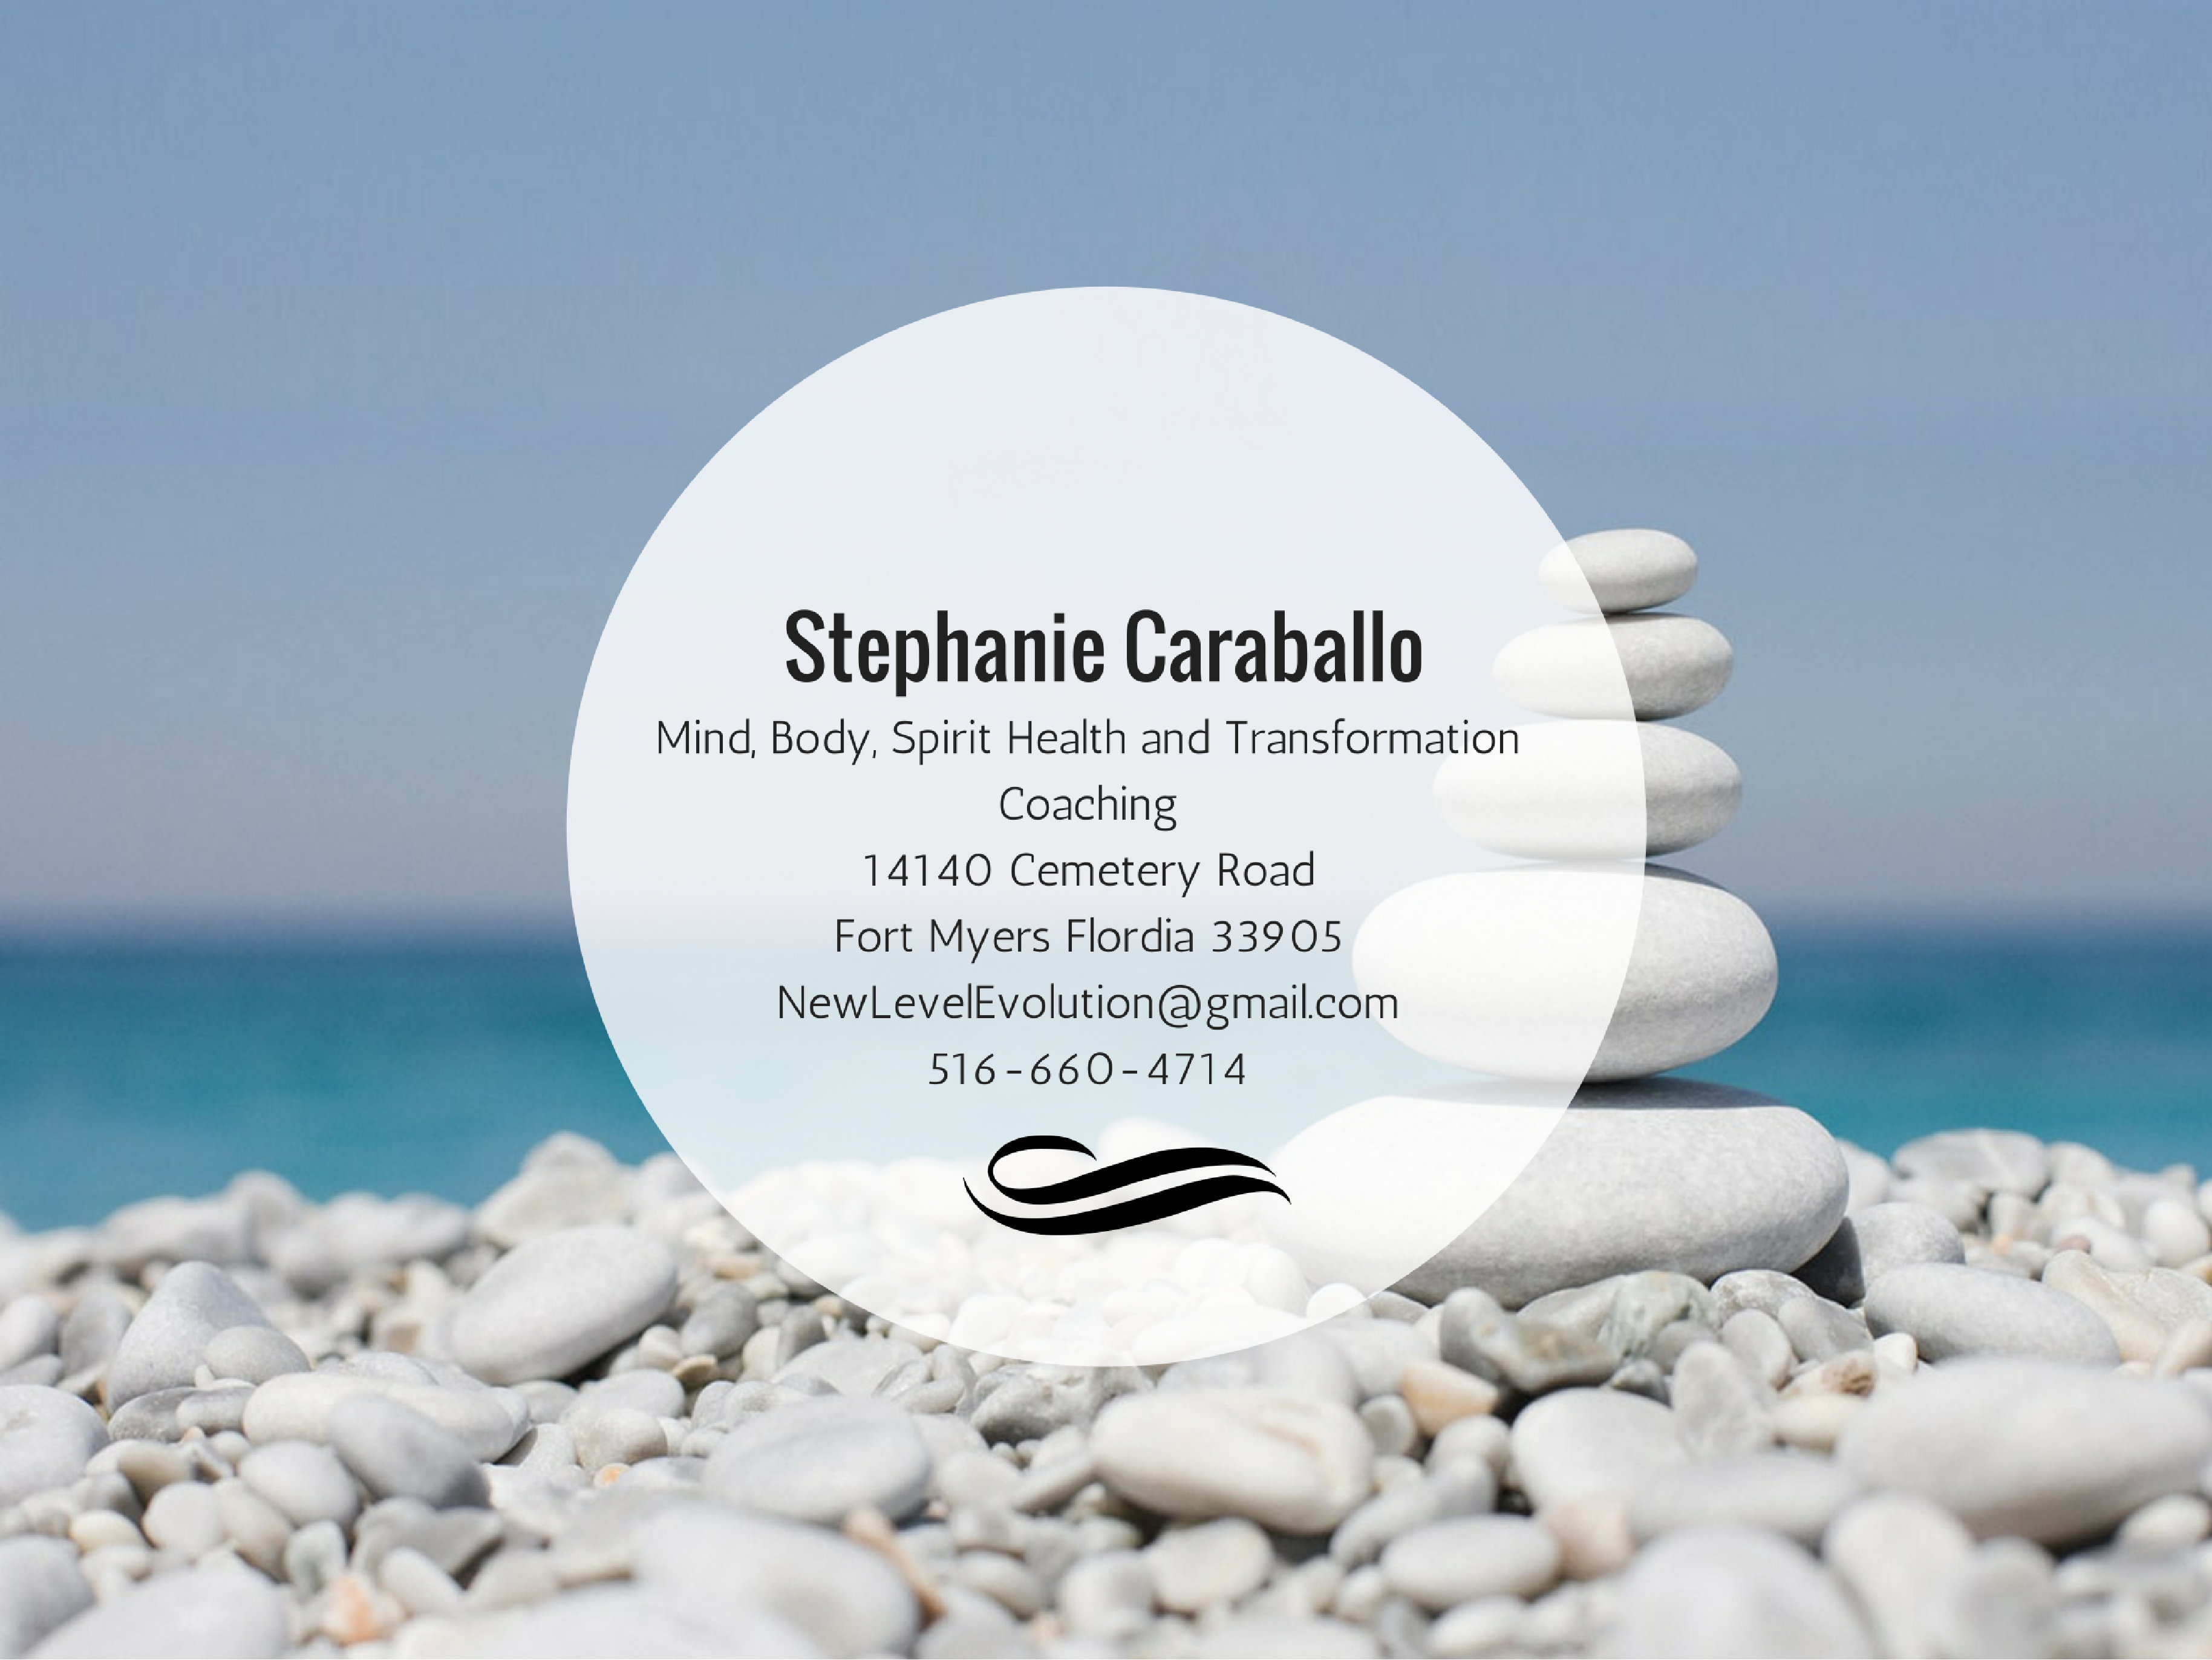 Stephanie Caraballo - Whole Health Medicine Institute